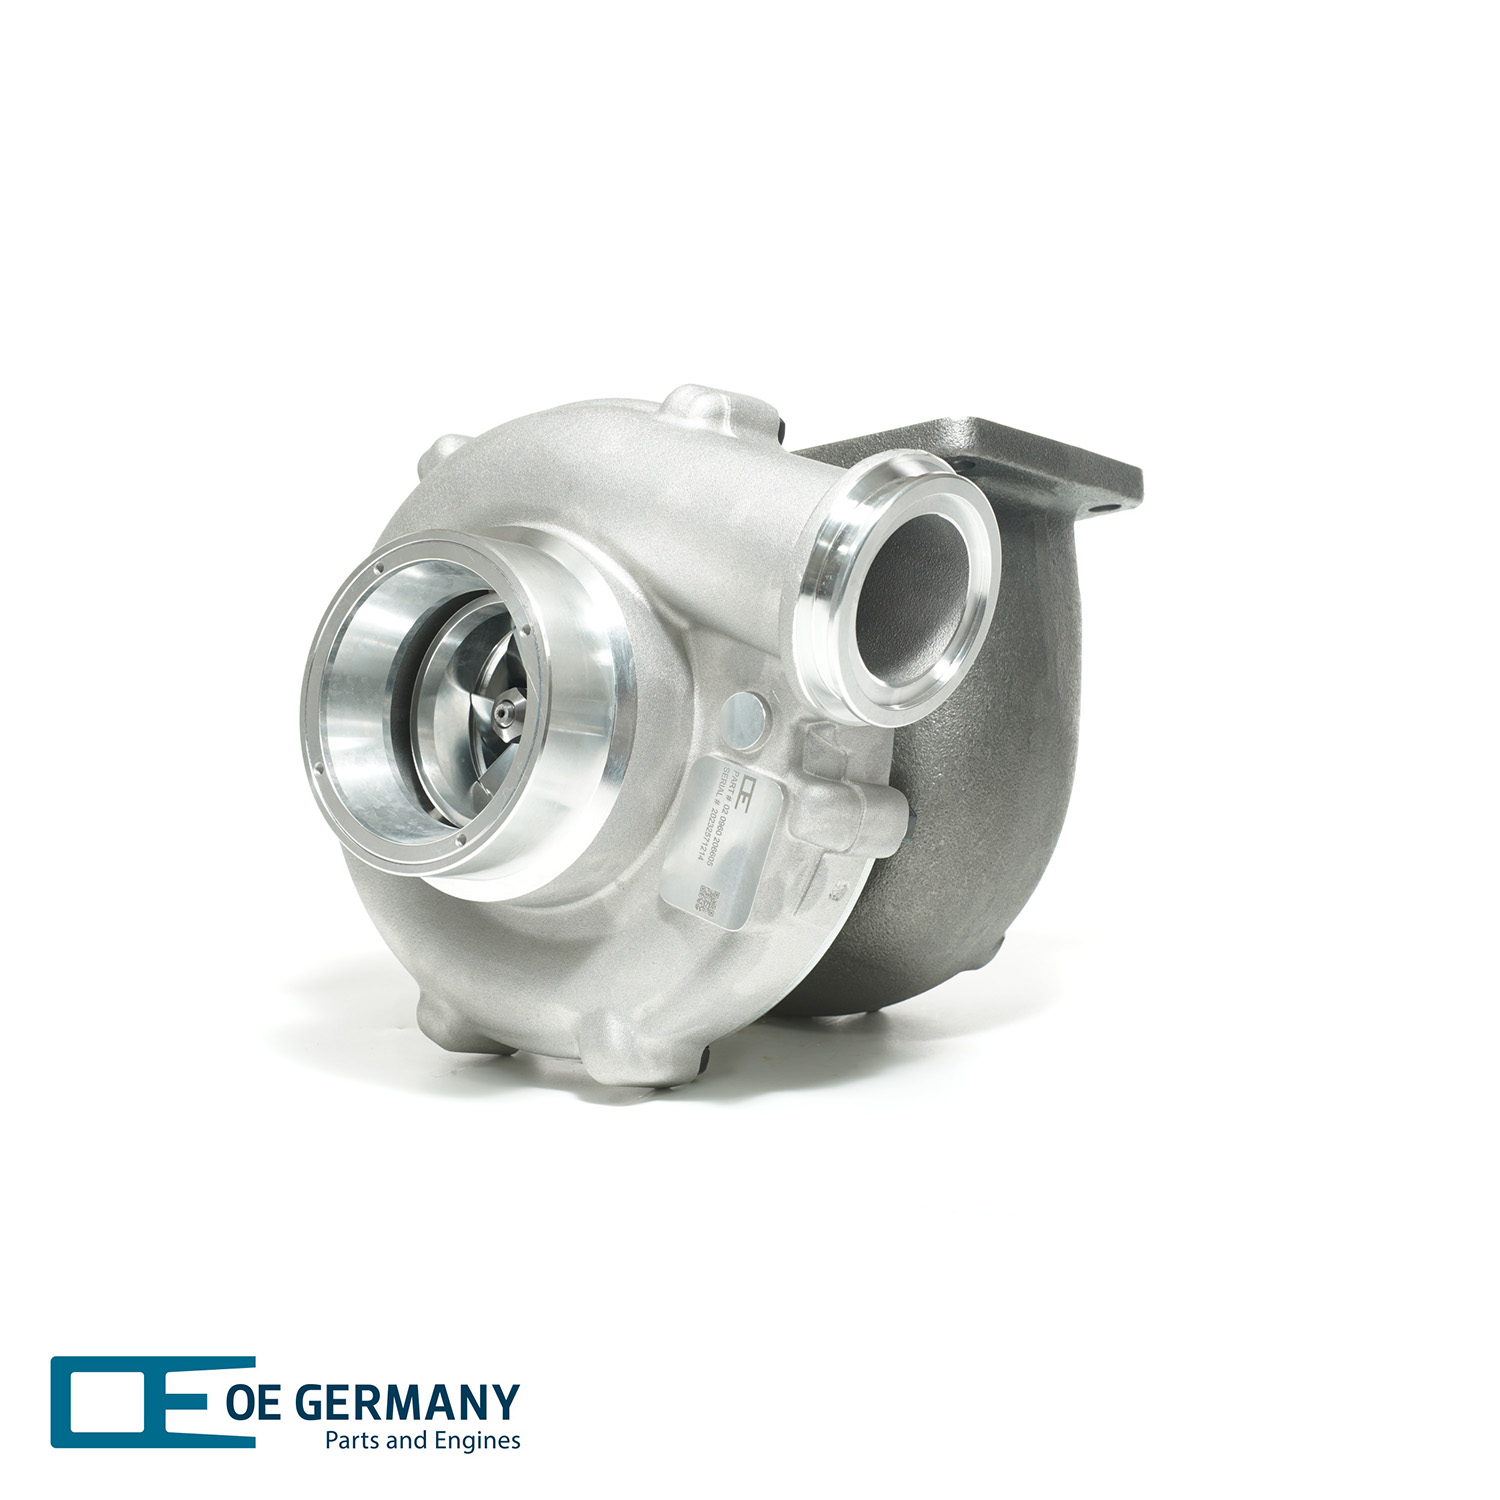 OE Germany Turbolader 02 0960 206605